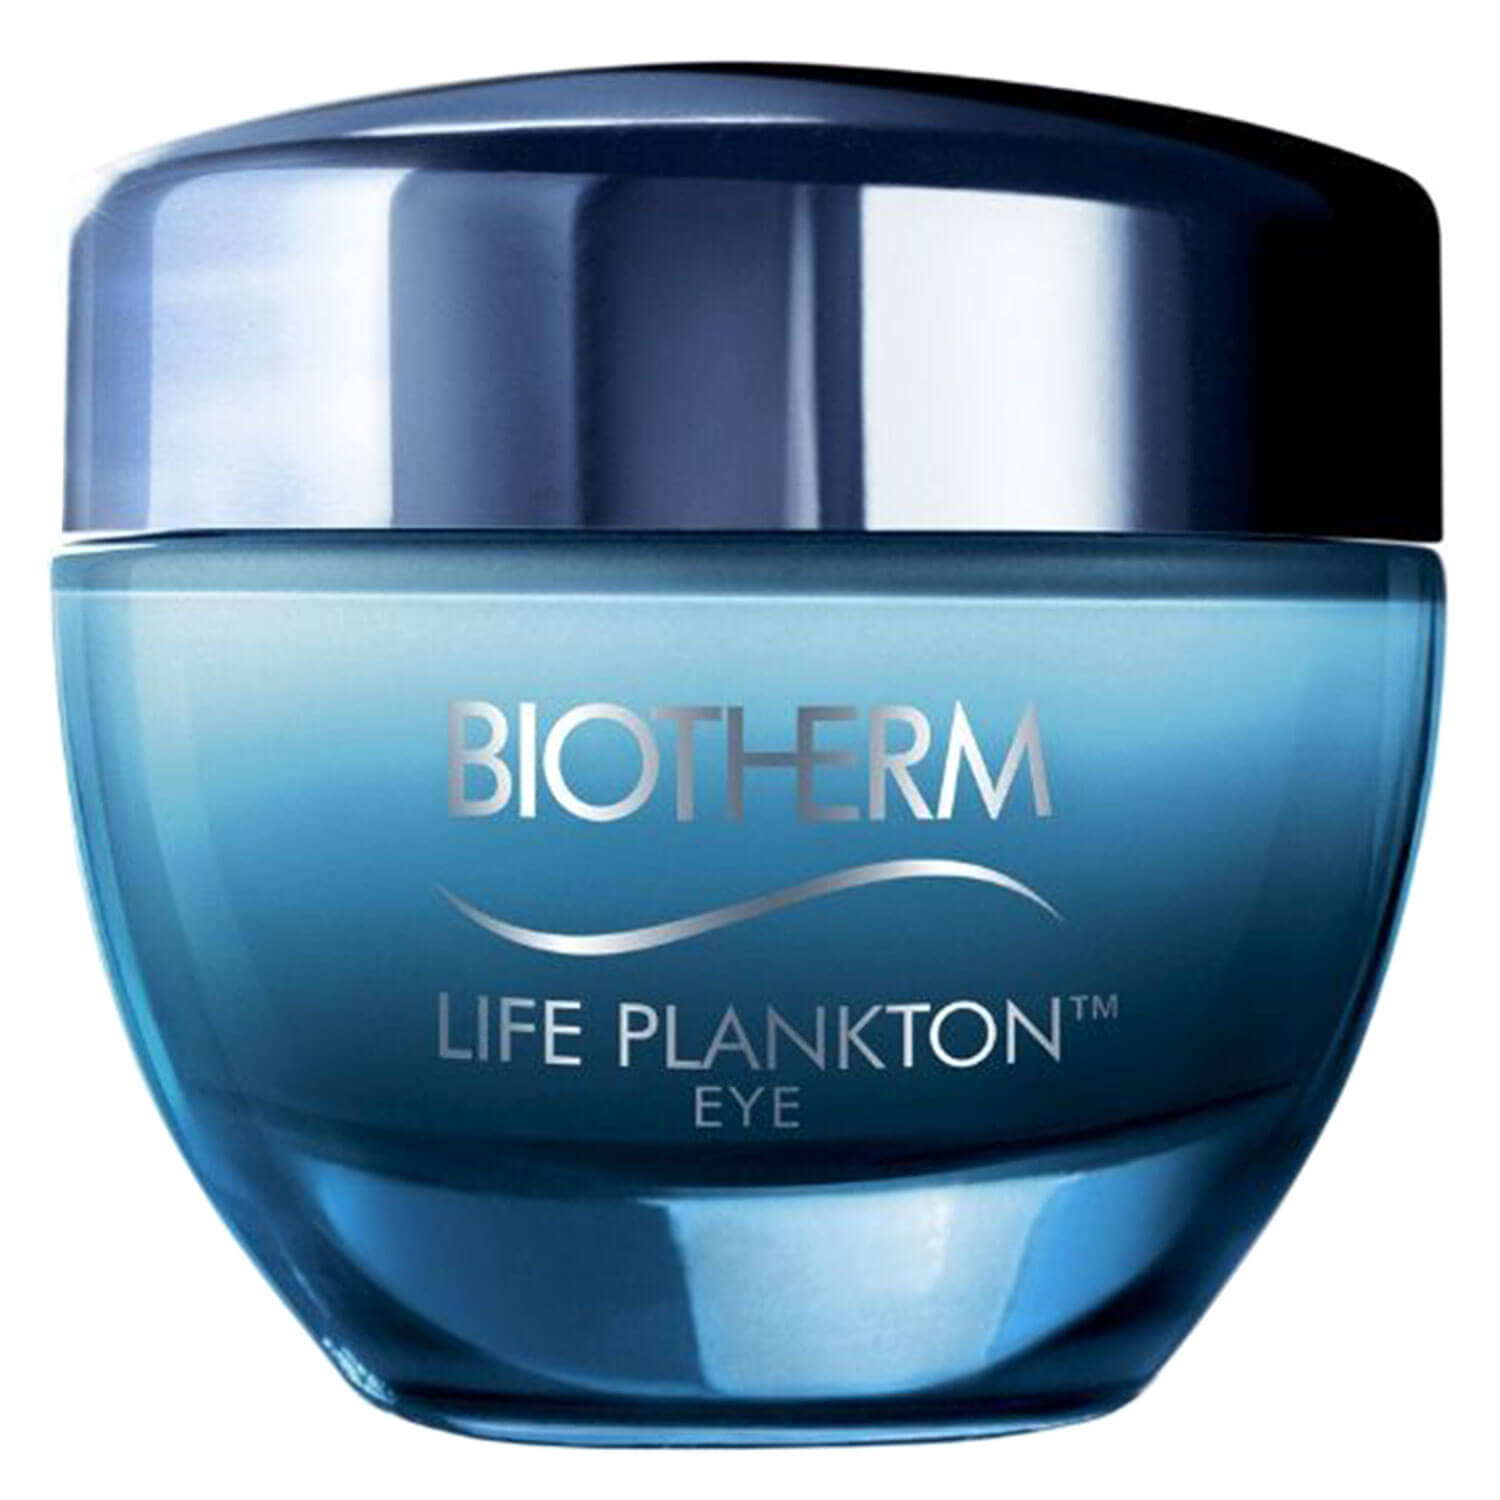 Biotherm gel. Biotherm Plankton Eye. Biotherm Life Plankton. Биотерм крем вокруг глаз. Biotherm Blue Therapy Eye.